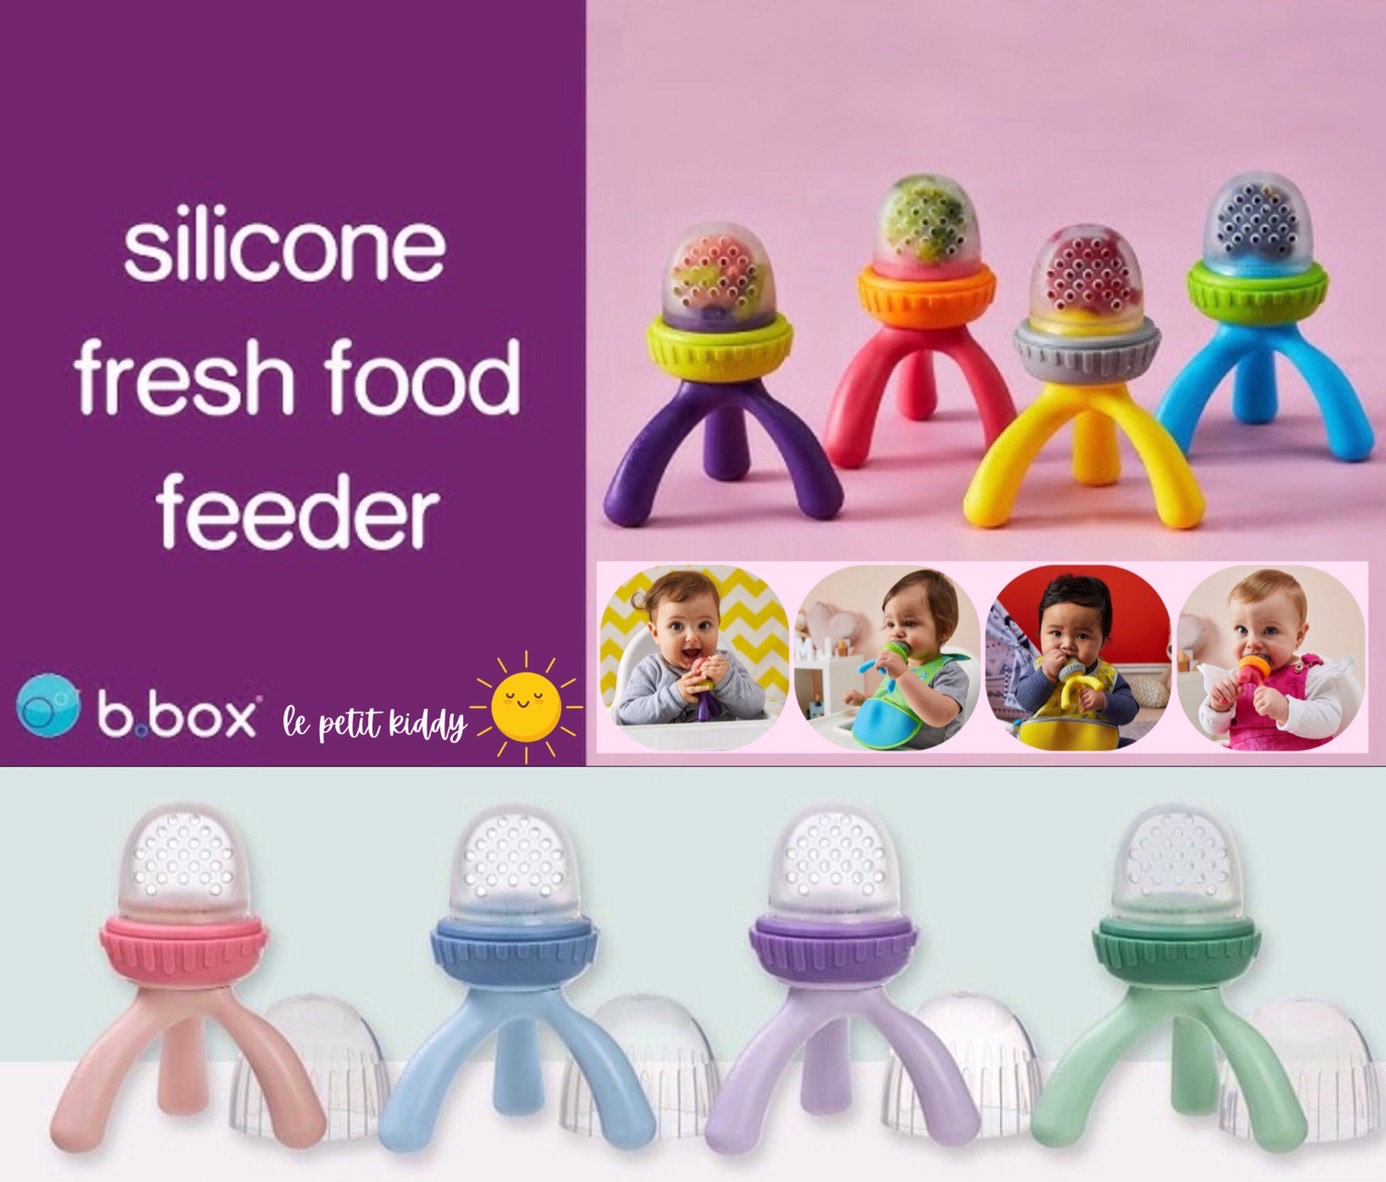 b.box Silicone Fresh Food Feeder - Strawberry Shake